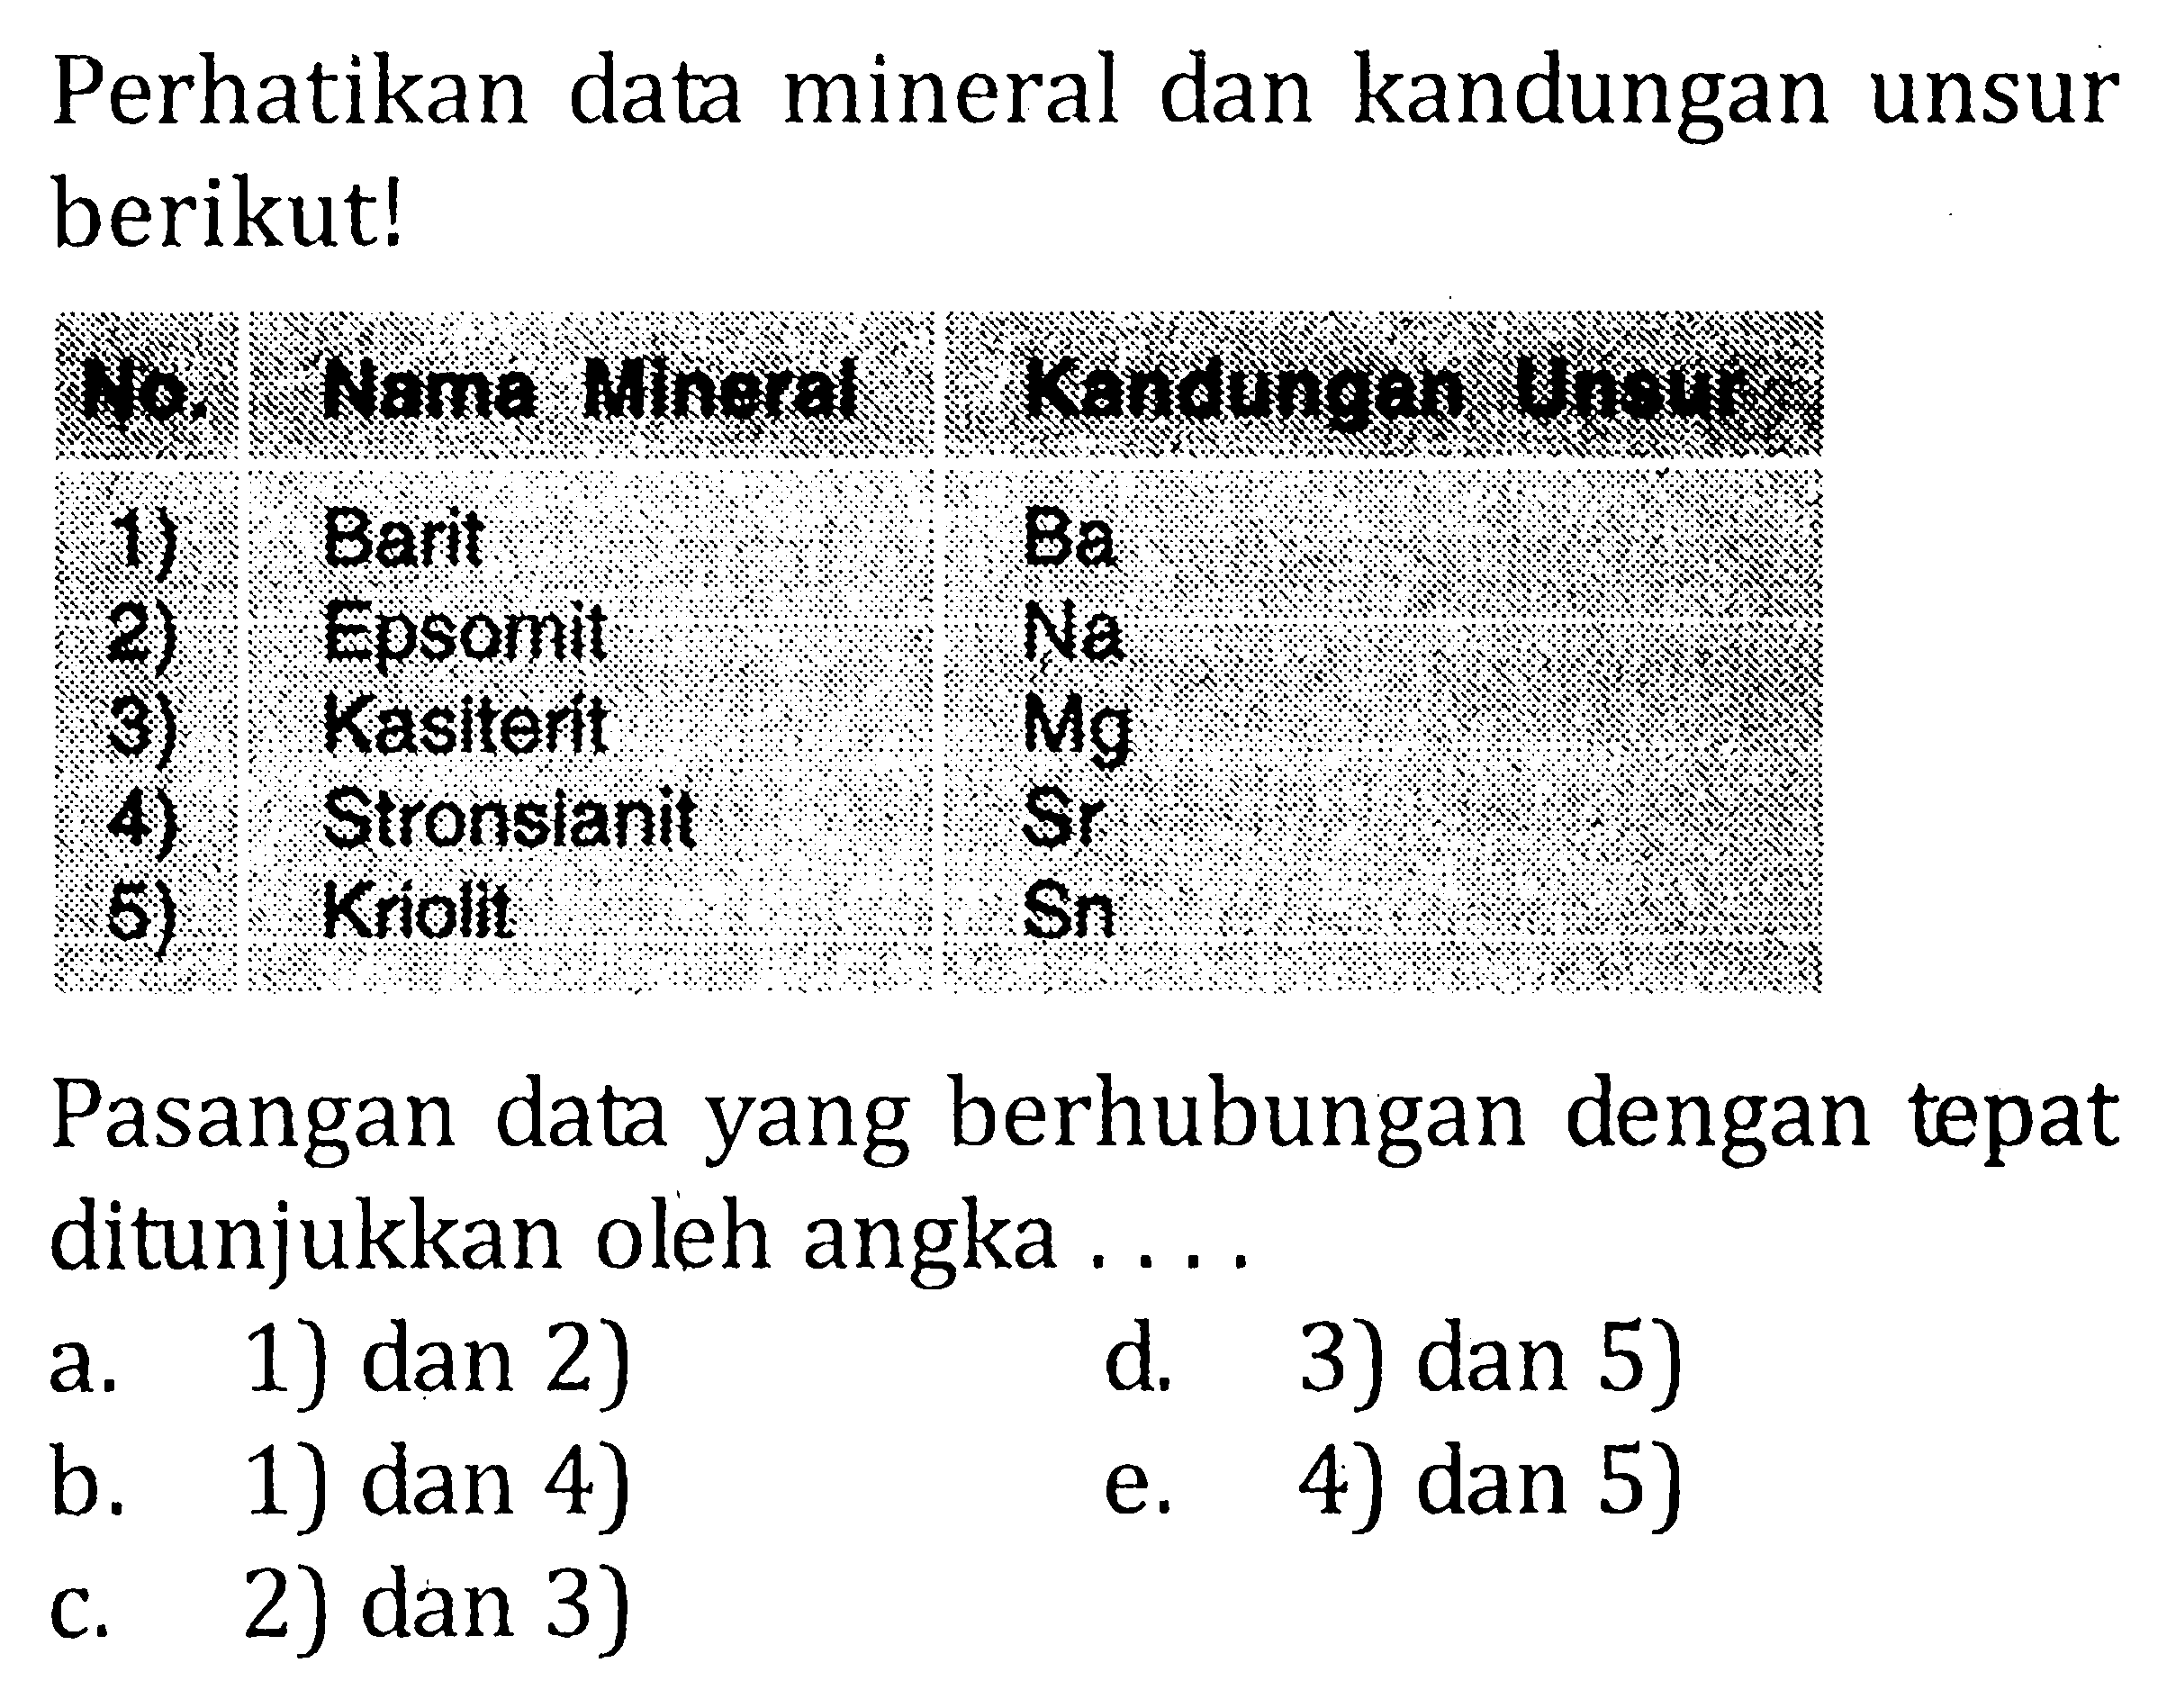 Perhatikan data mineral dan kandungan unsur berikut! No Nama Mineral Kandungan Unsur 1) Barit Ba 2) Epsomit Na 3) Kasiterit Mg 4) Stronsianit Sr 5) Kriolit Sn Pasangan data yang berhubungan dengan tepat ditunjukkan oleh angka .... 